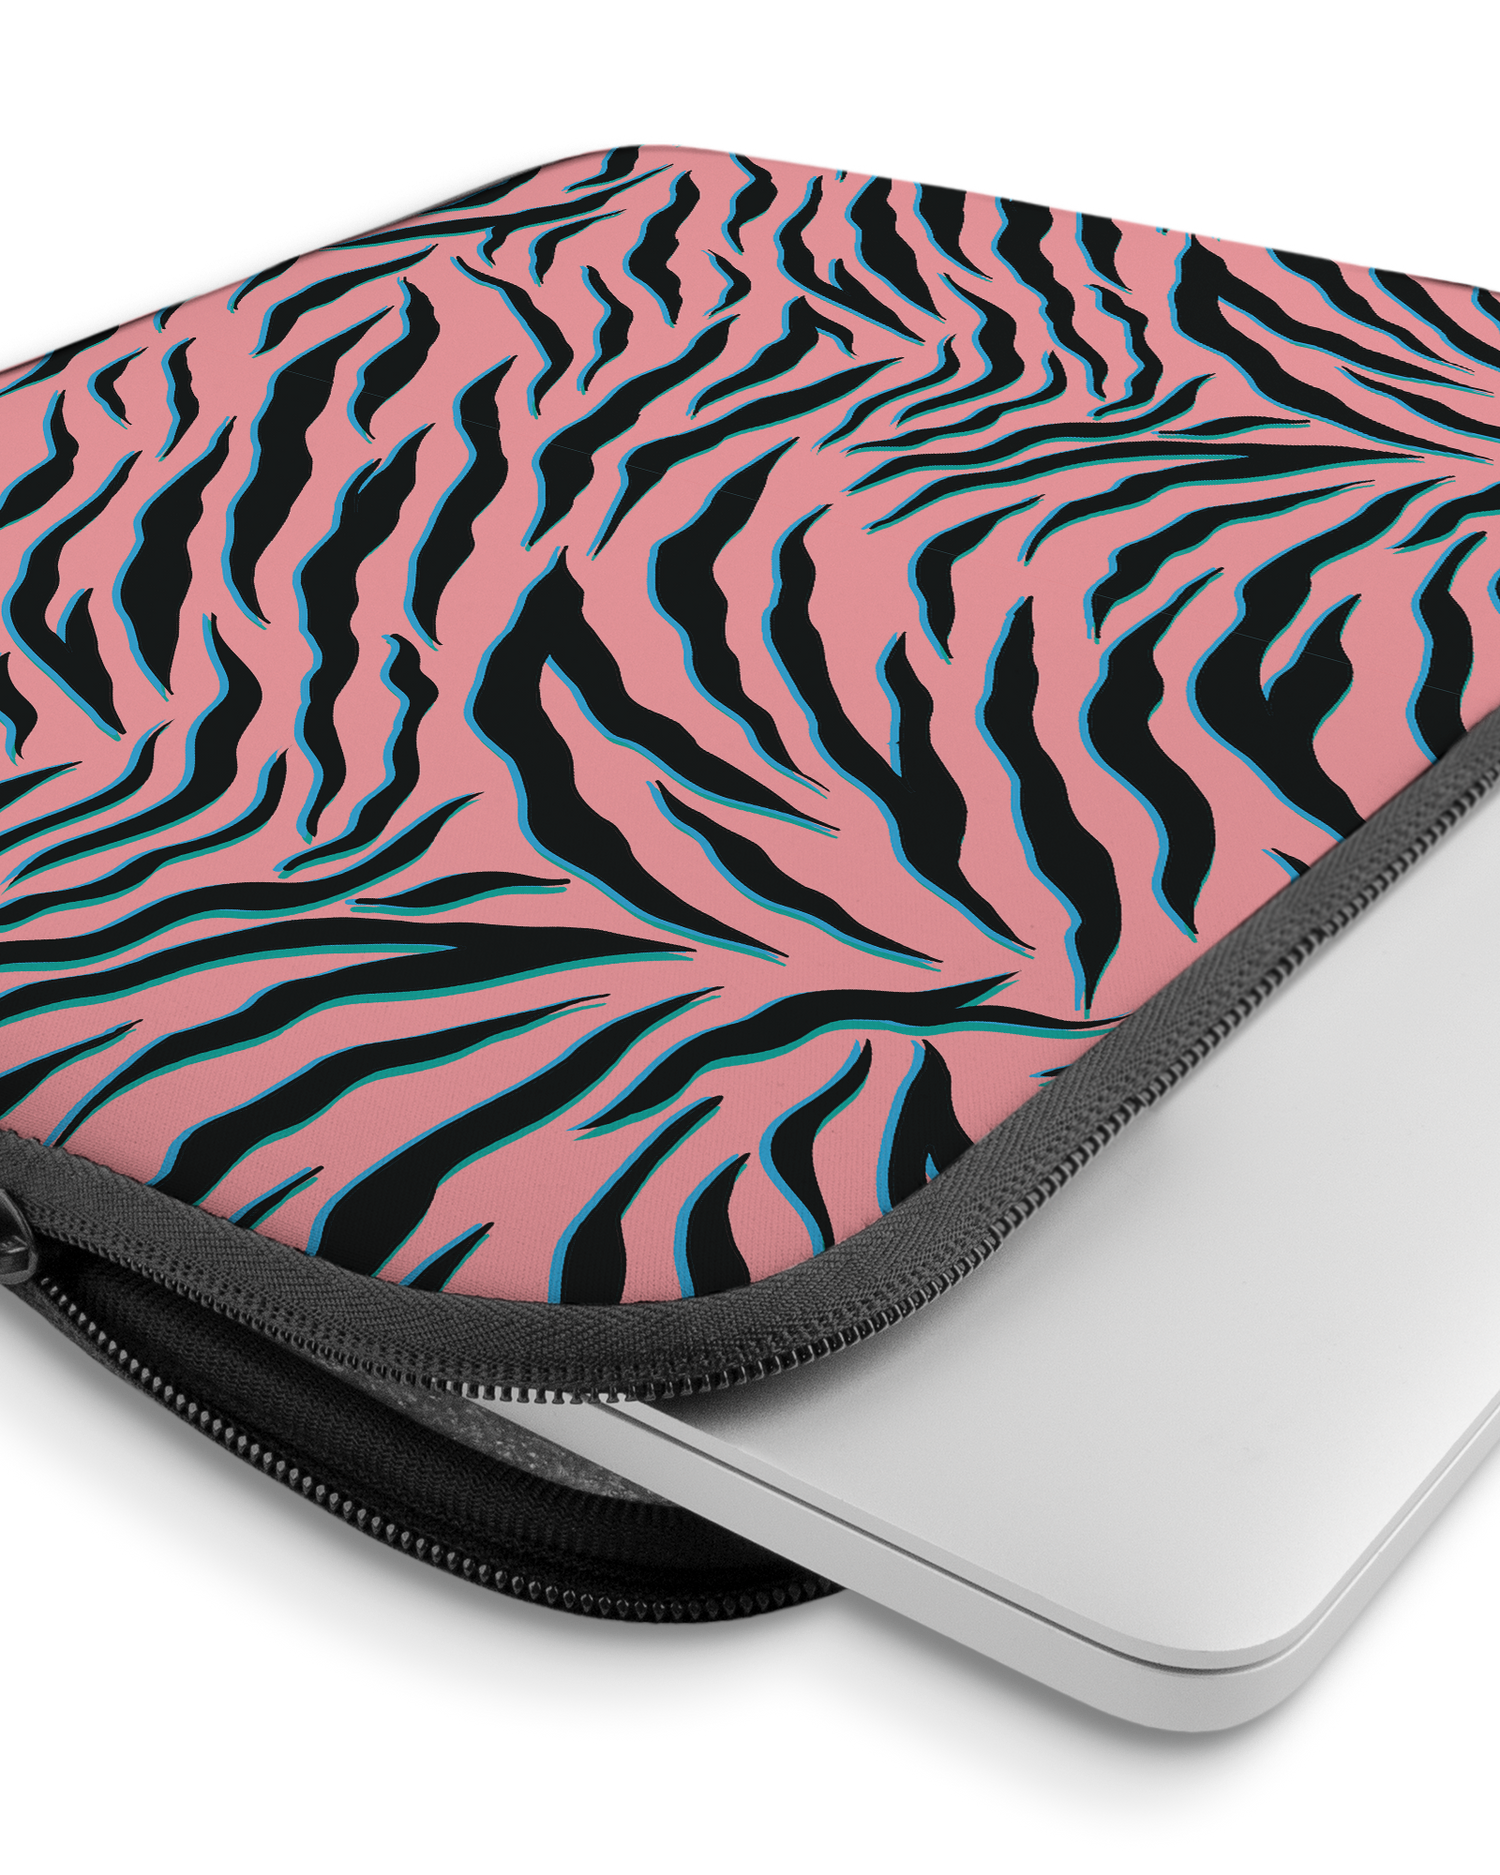 Pink Zebra Laptop Case 15 inch with device inside